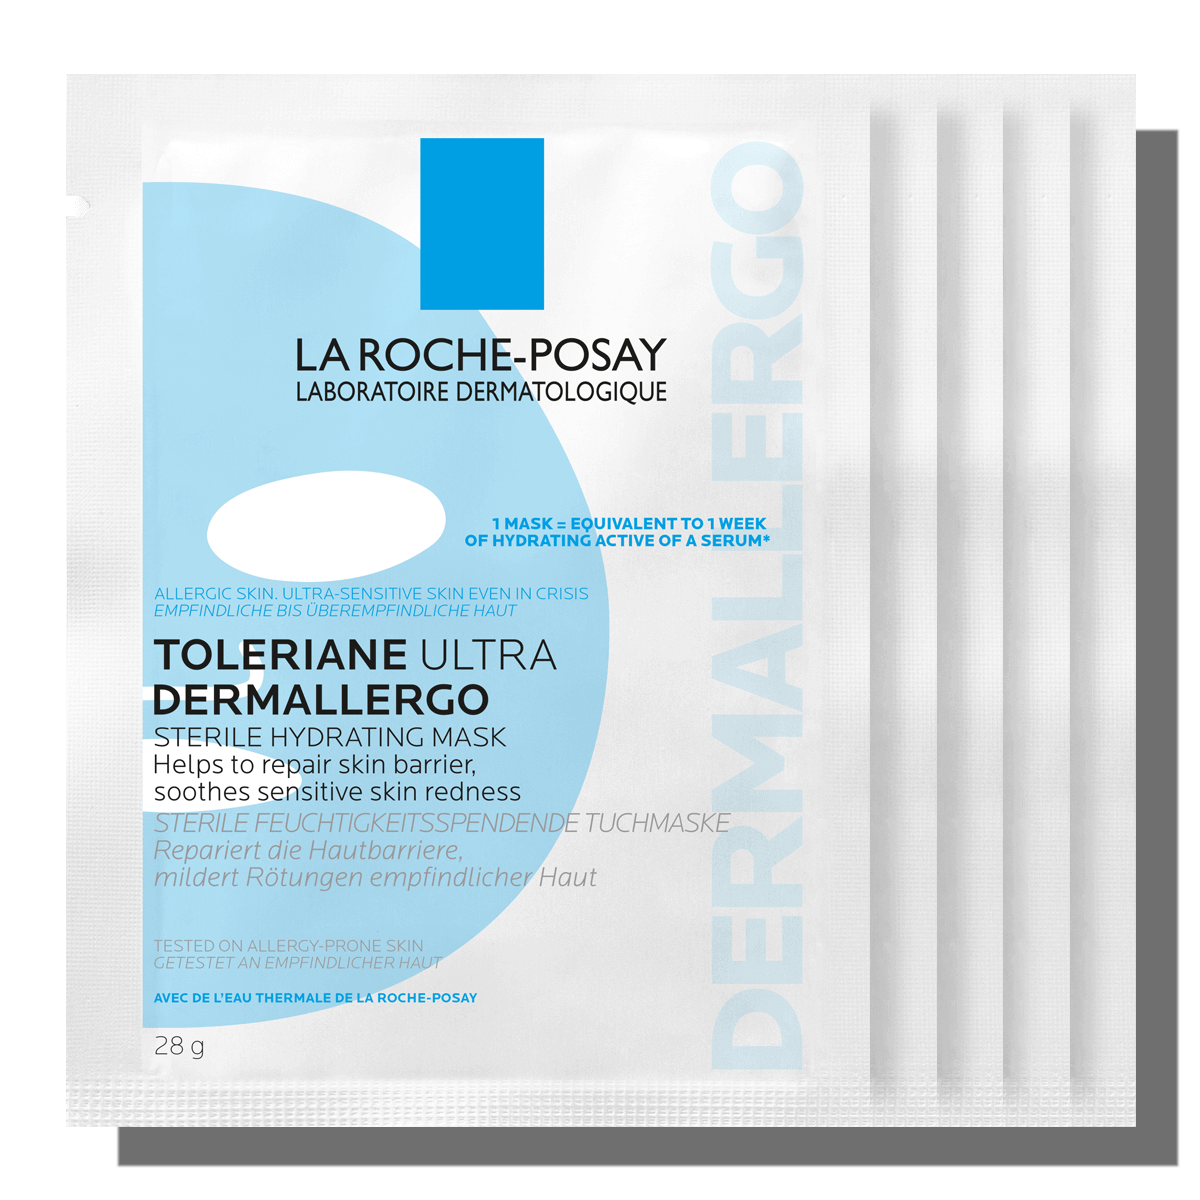 larocheposay product allergic toleriane mask packshot front